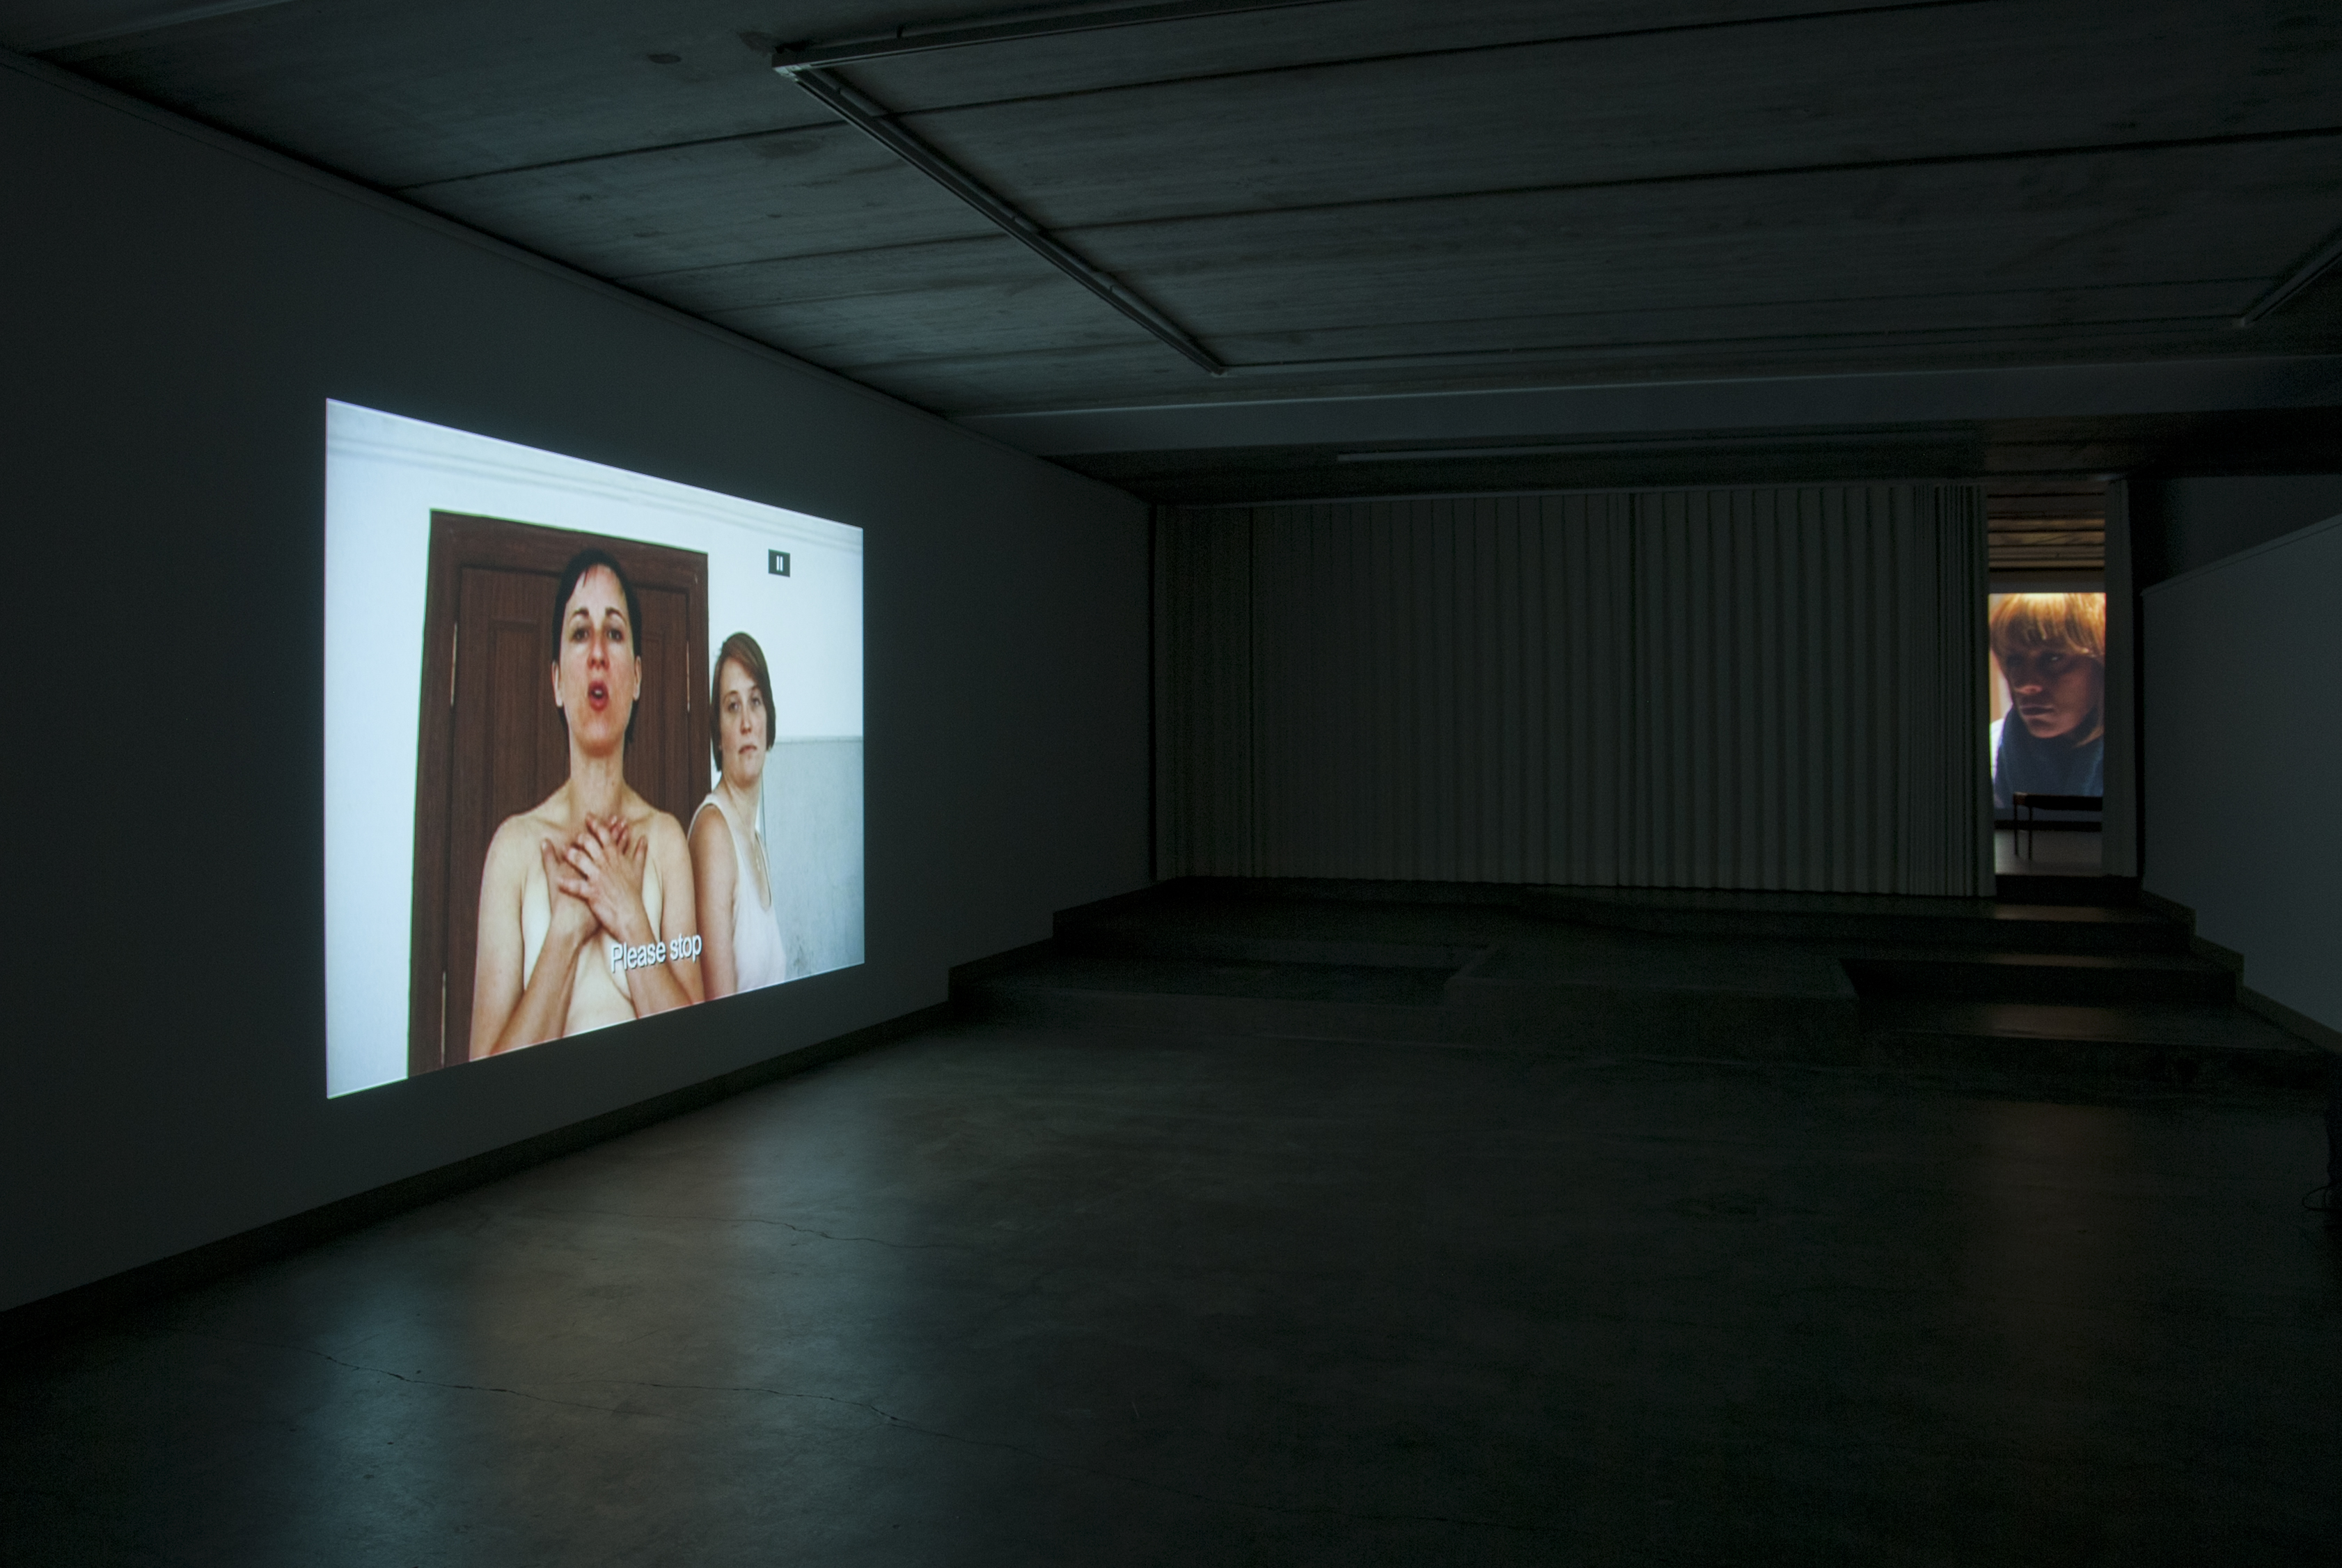 Keren Cytter, Tutorial, 2013 - exhibition view